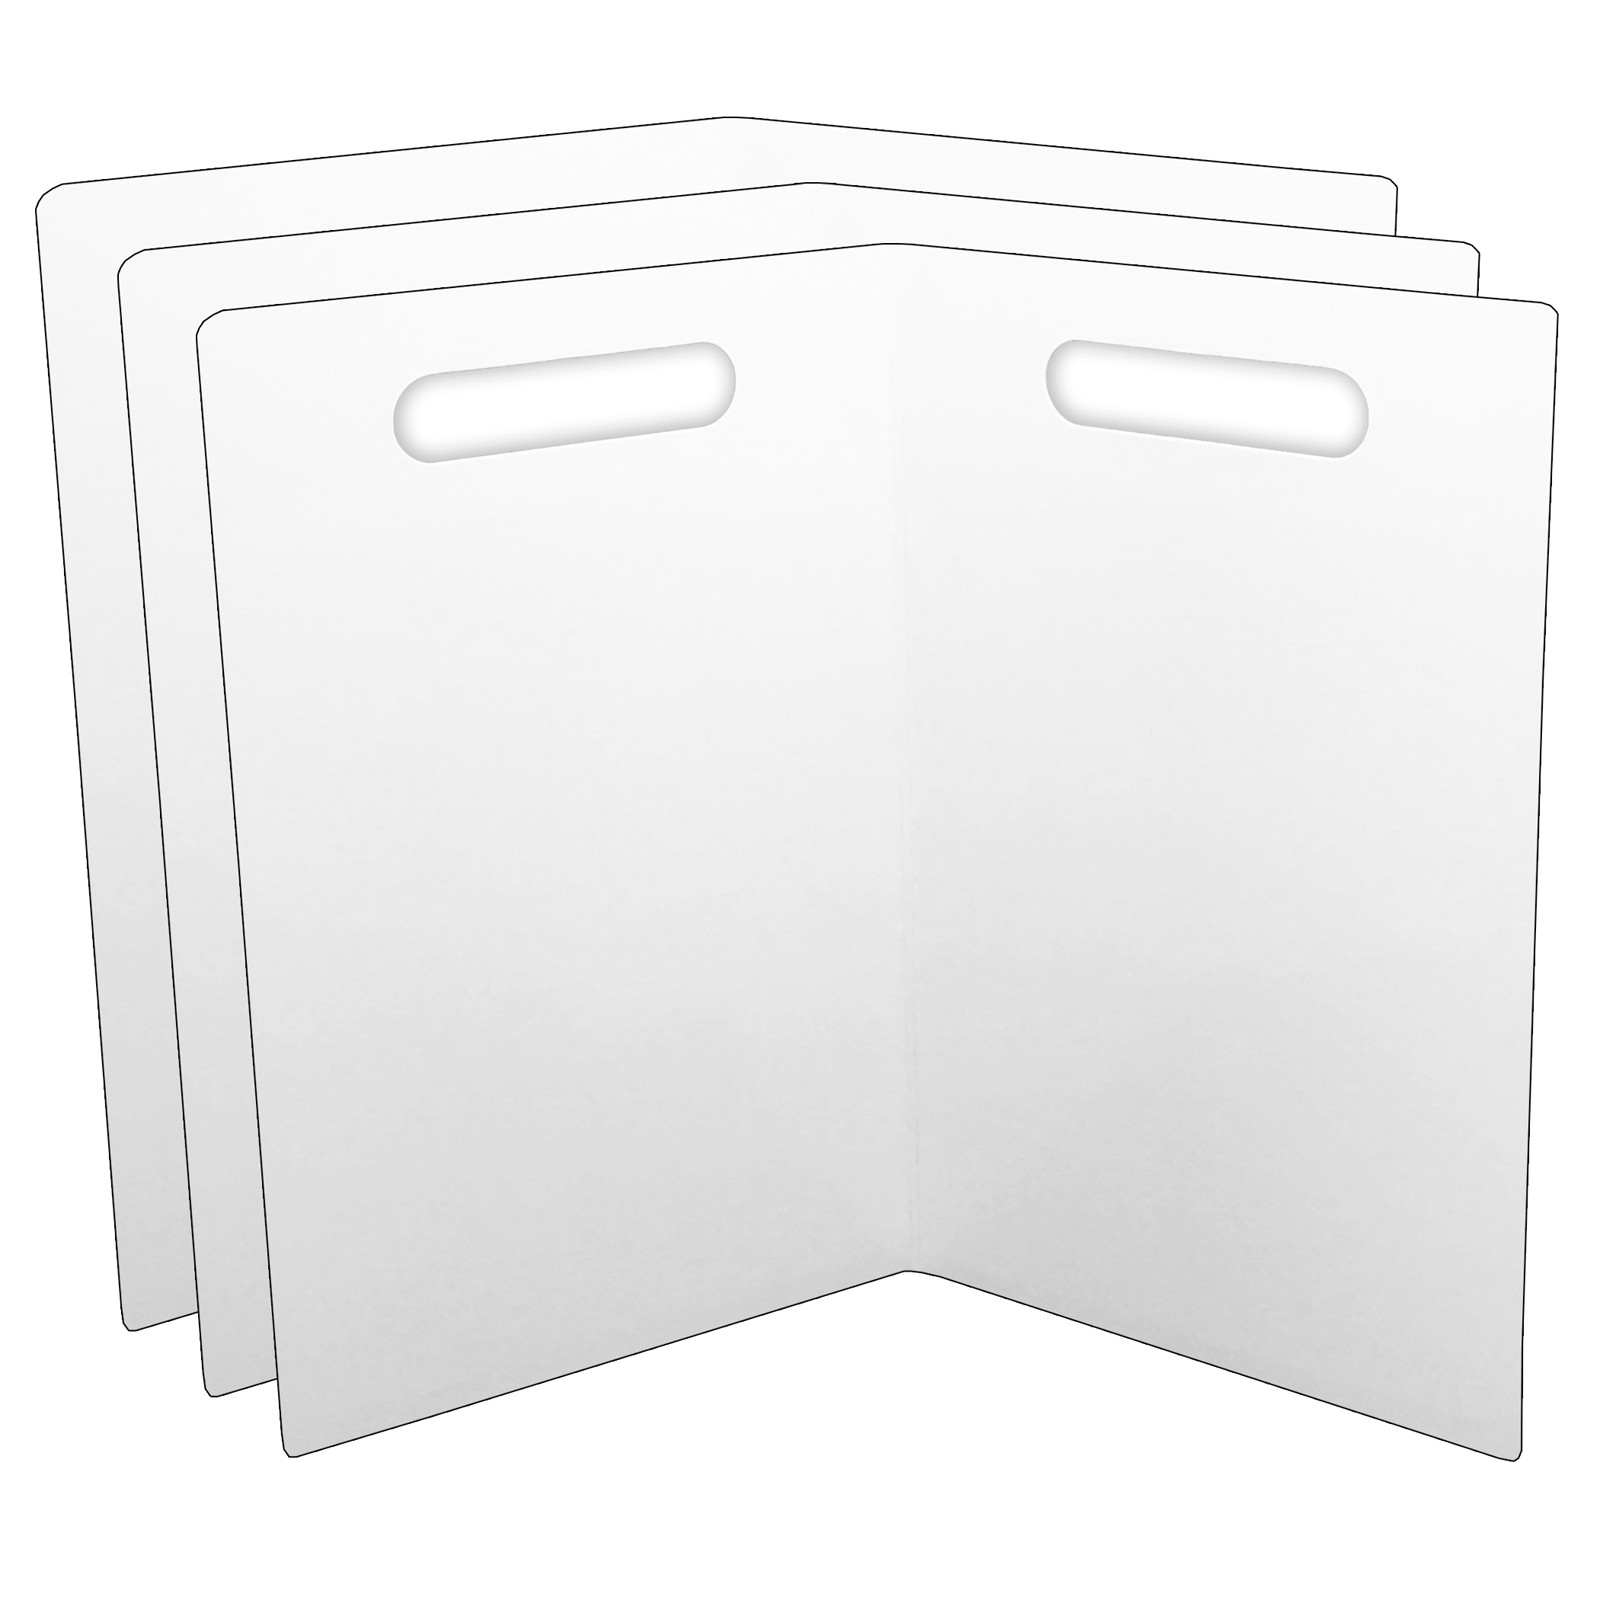 Folding Magnetic Whiteboard, White, Pack of 3